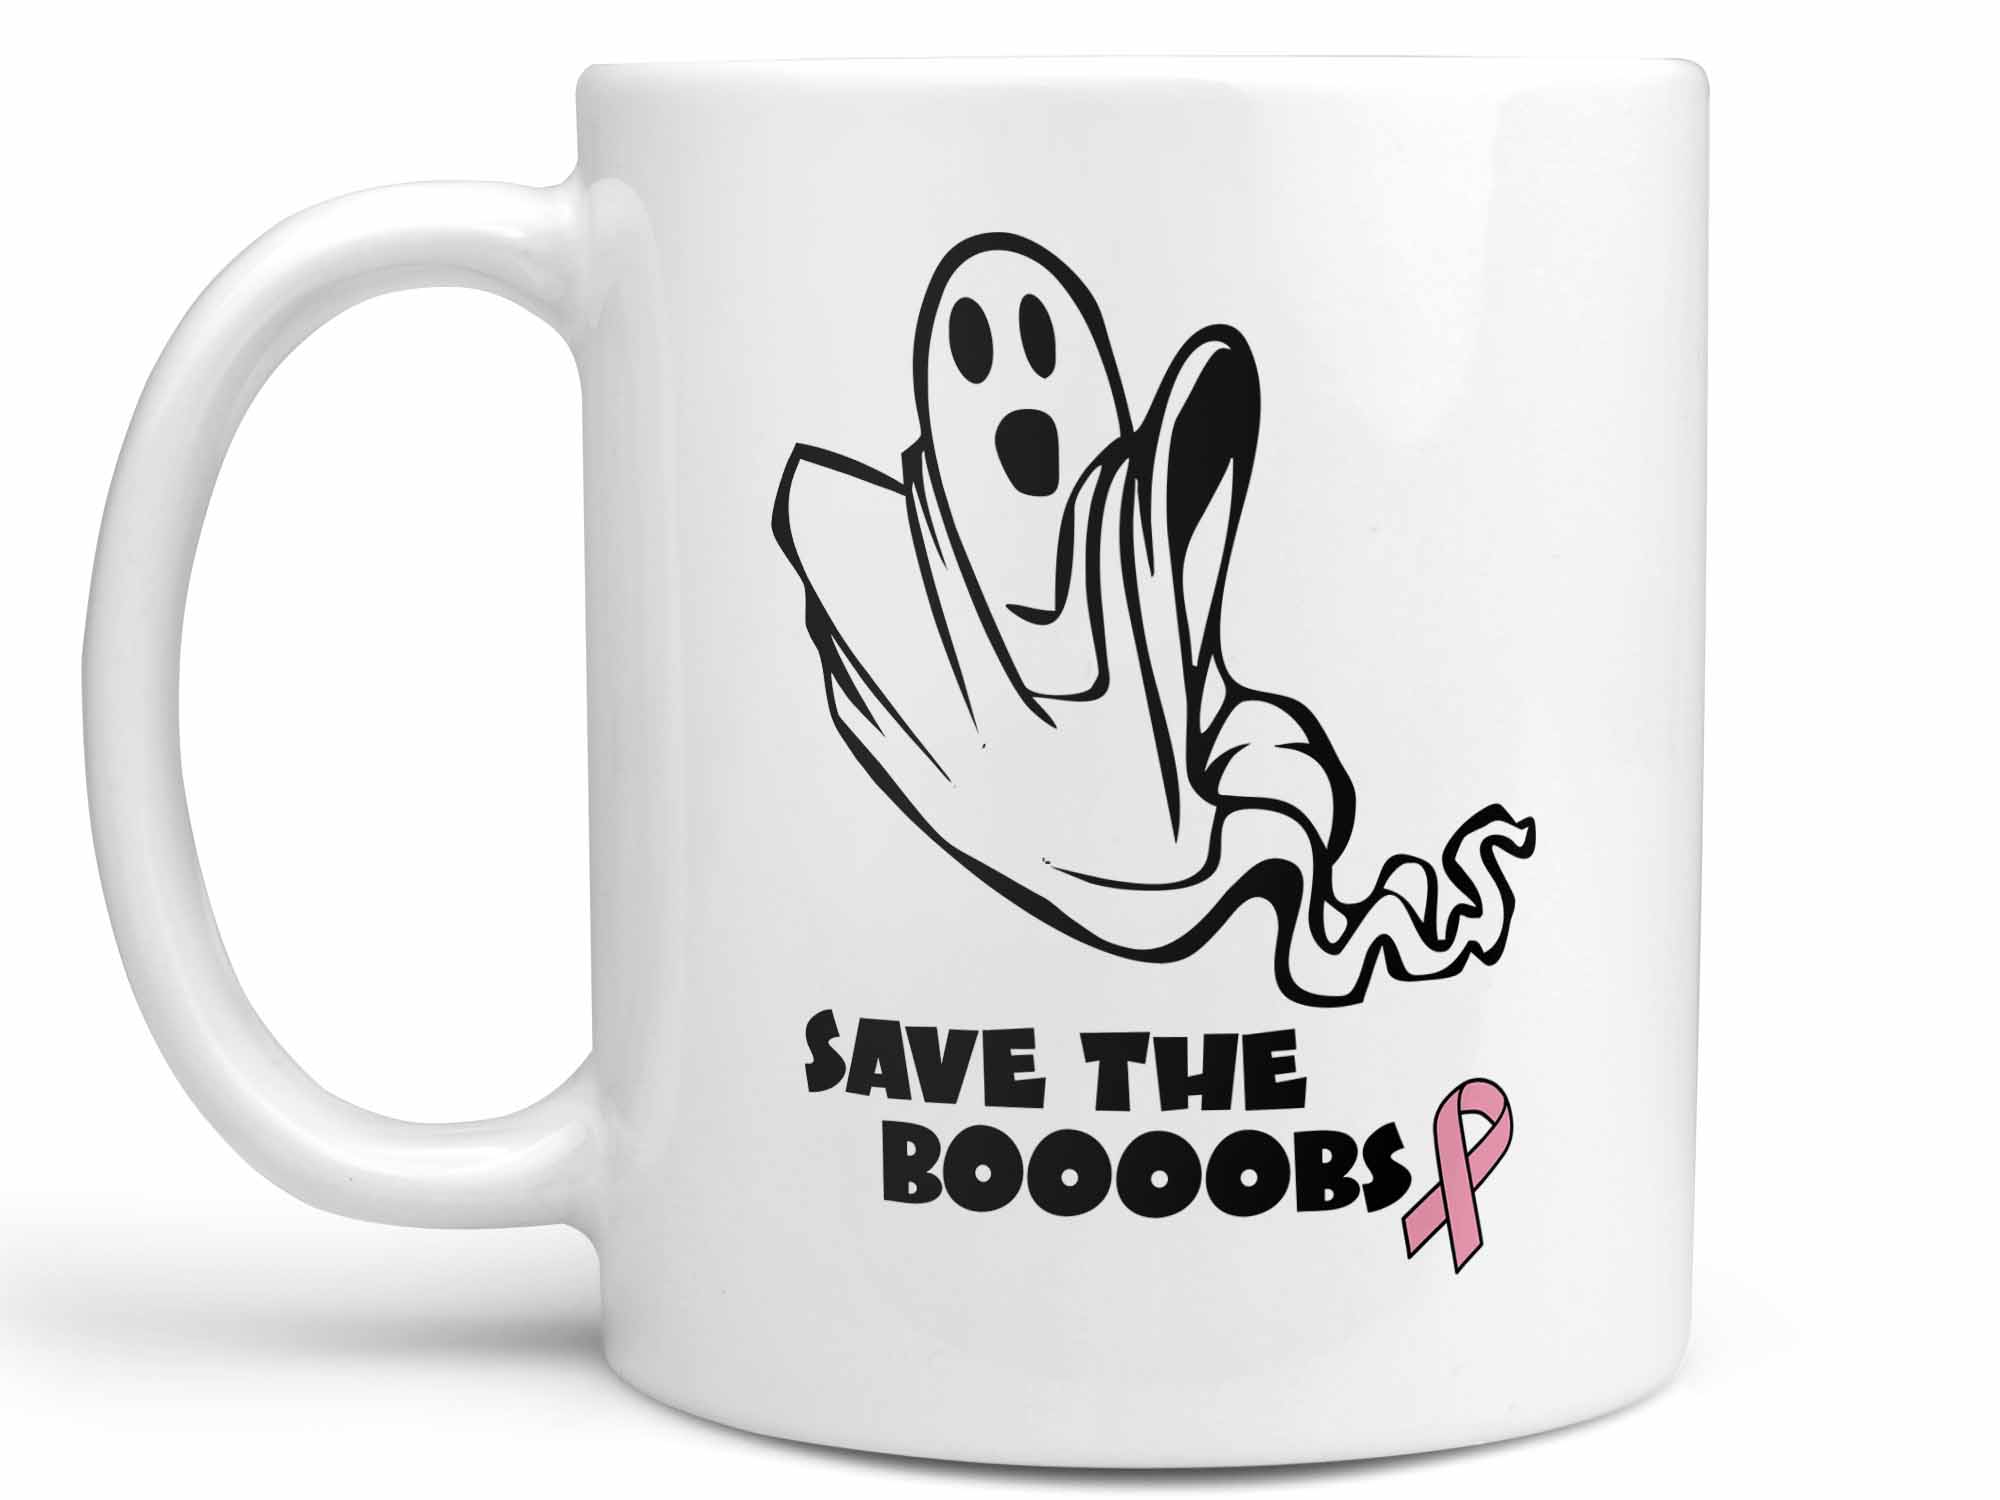 Save the Boobs Coffee Mug,Coffee Mugs Never Lie,Coffee Mug